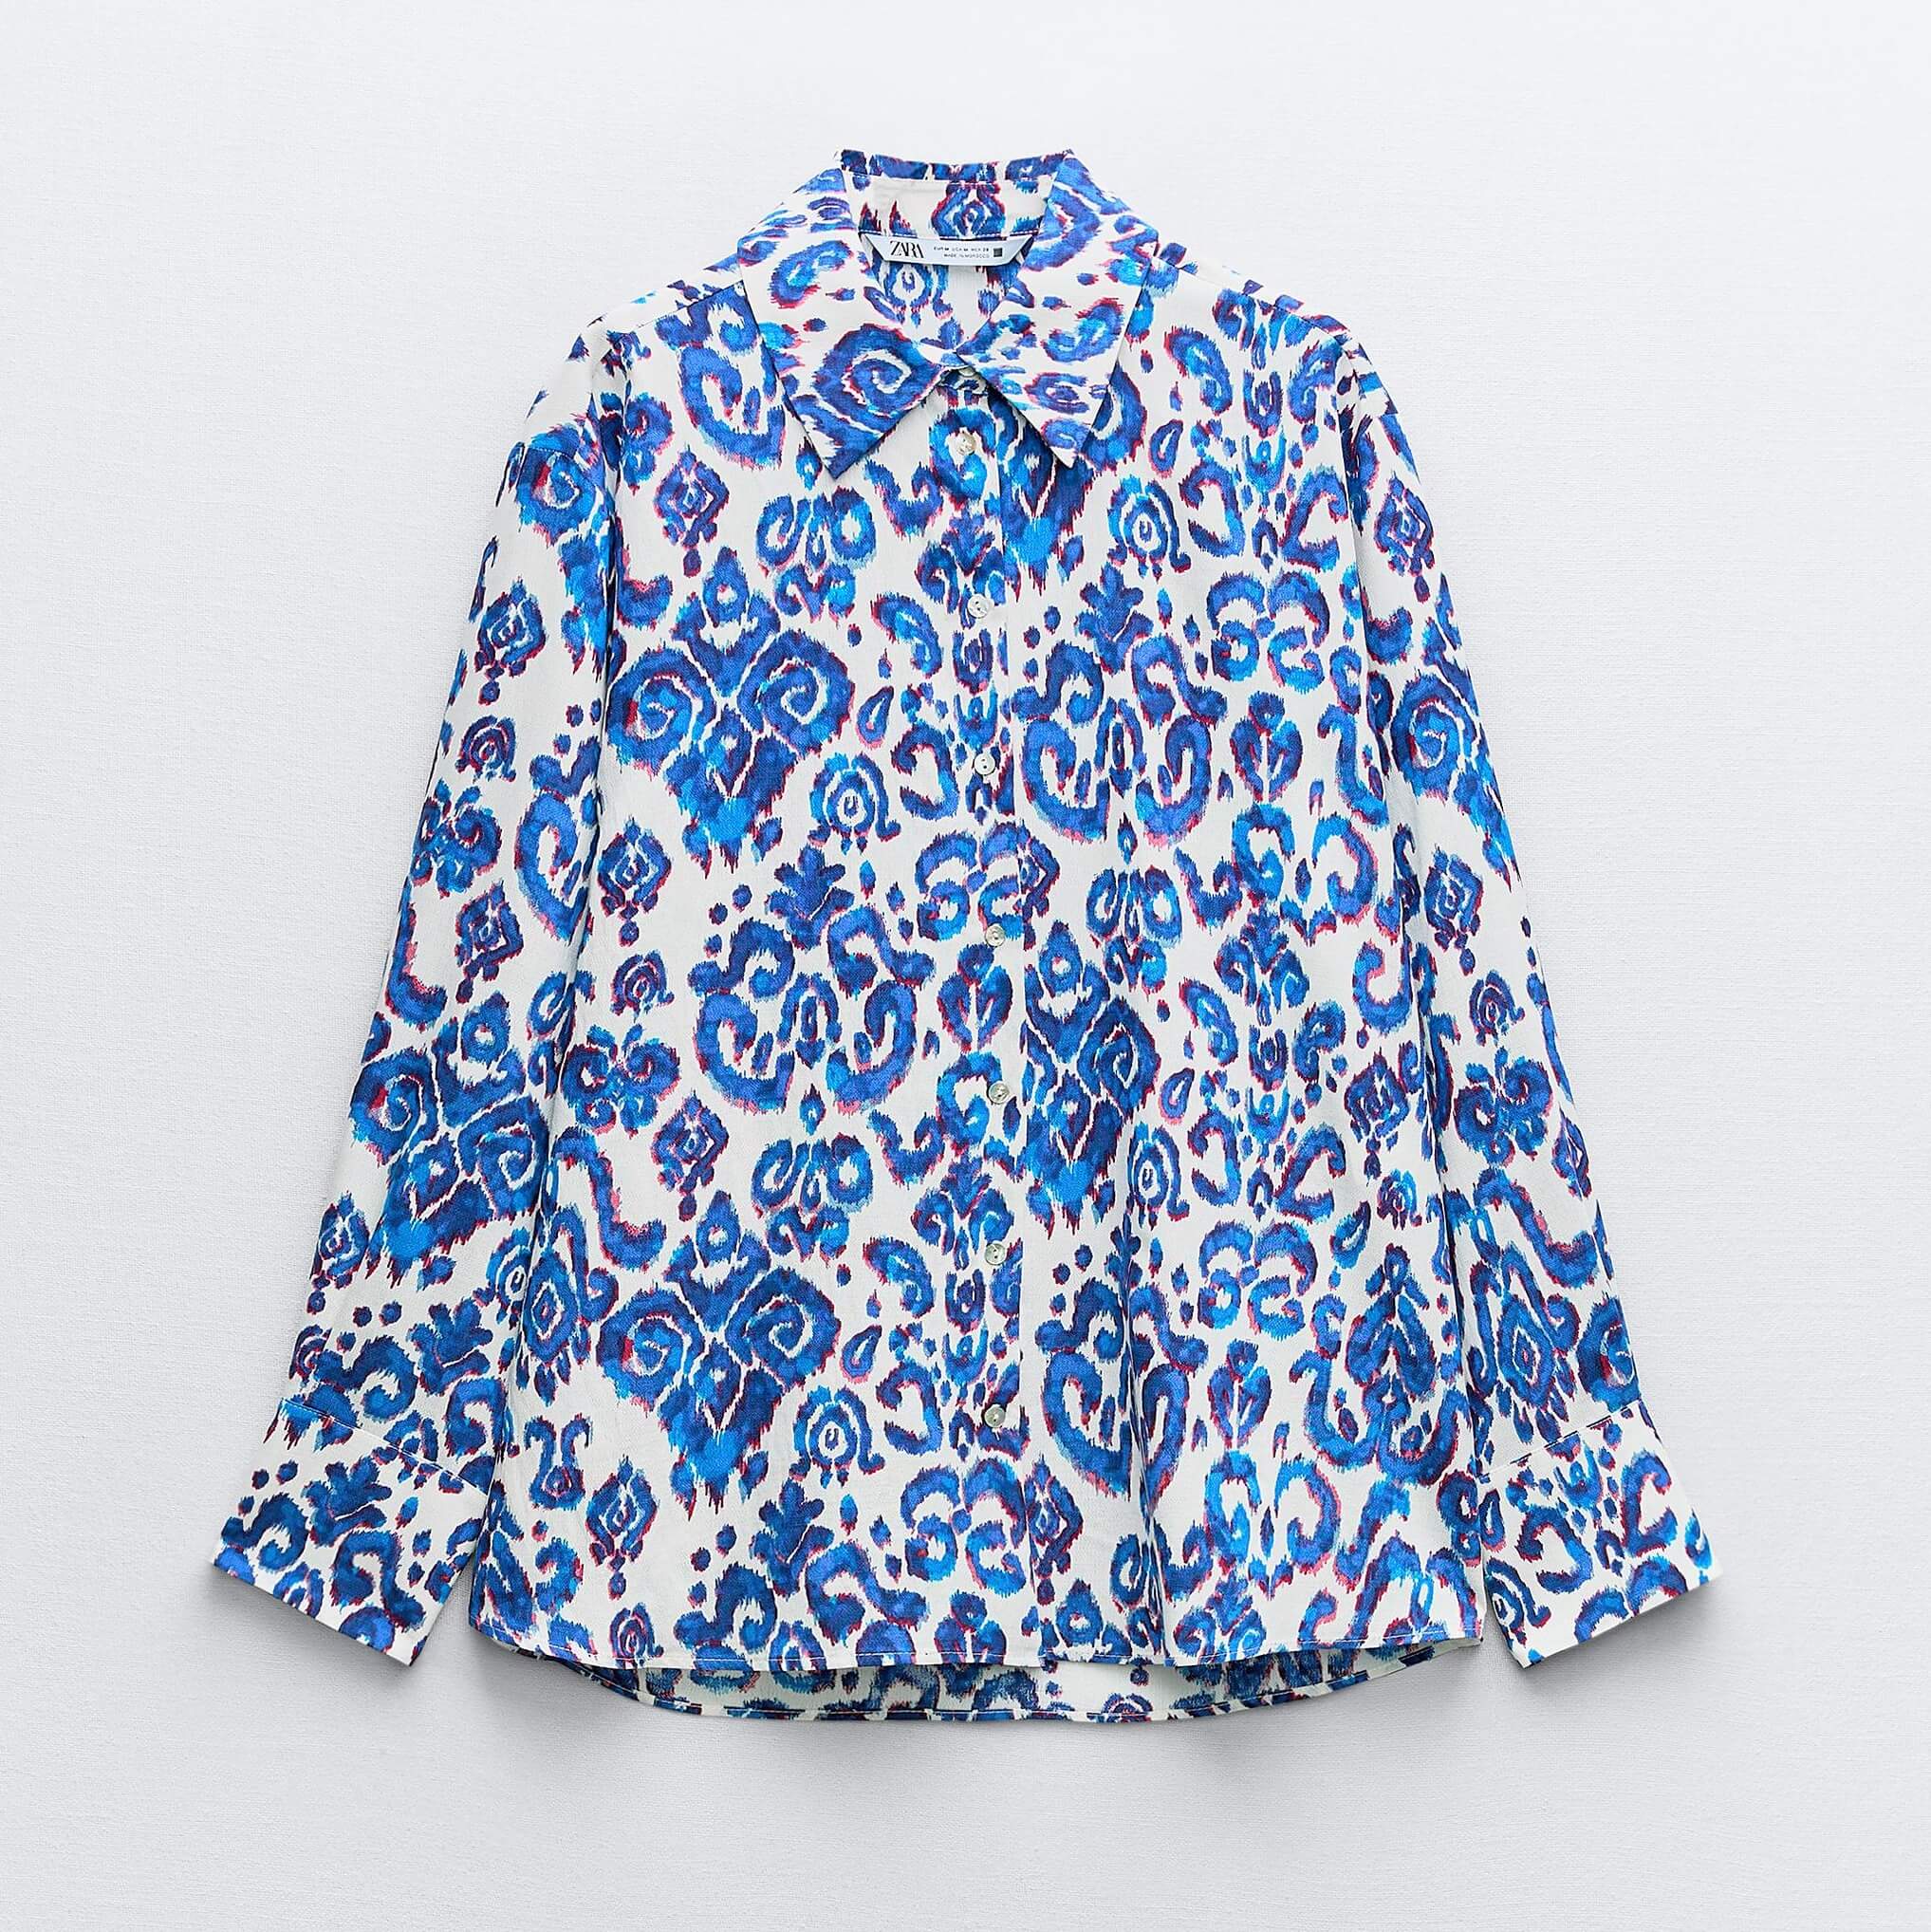 Рубашка Zara Printed, синий/белый рубашка zara flowing printed разноцветный